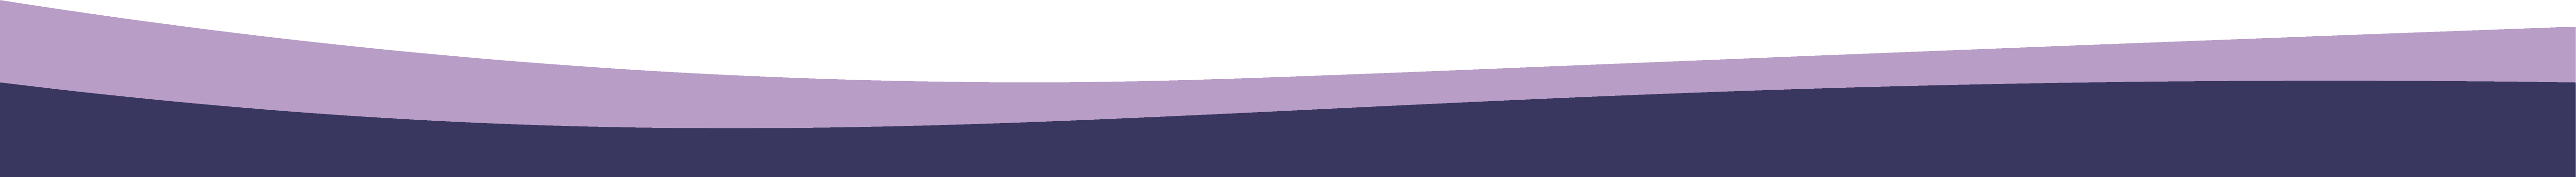 Purple wavy line